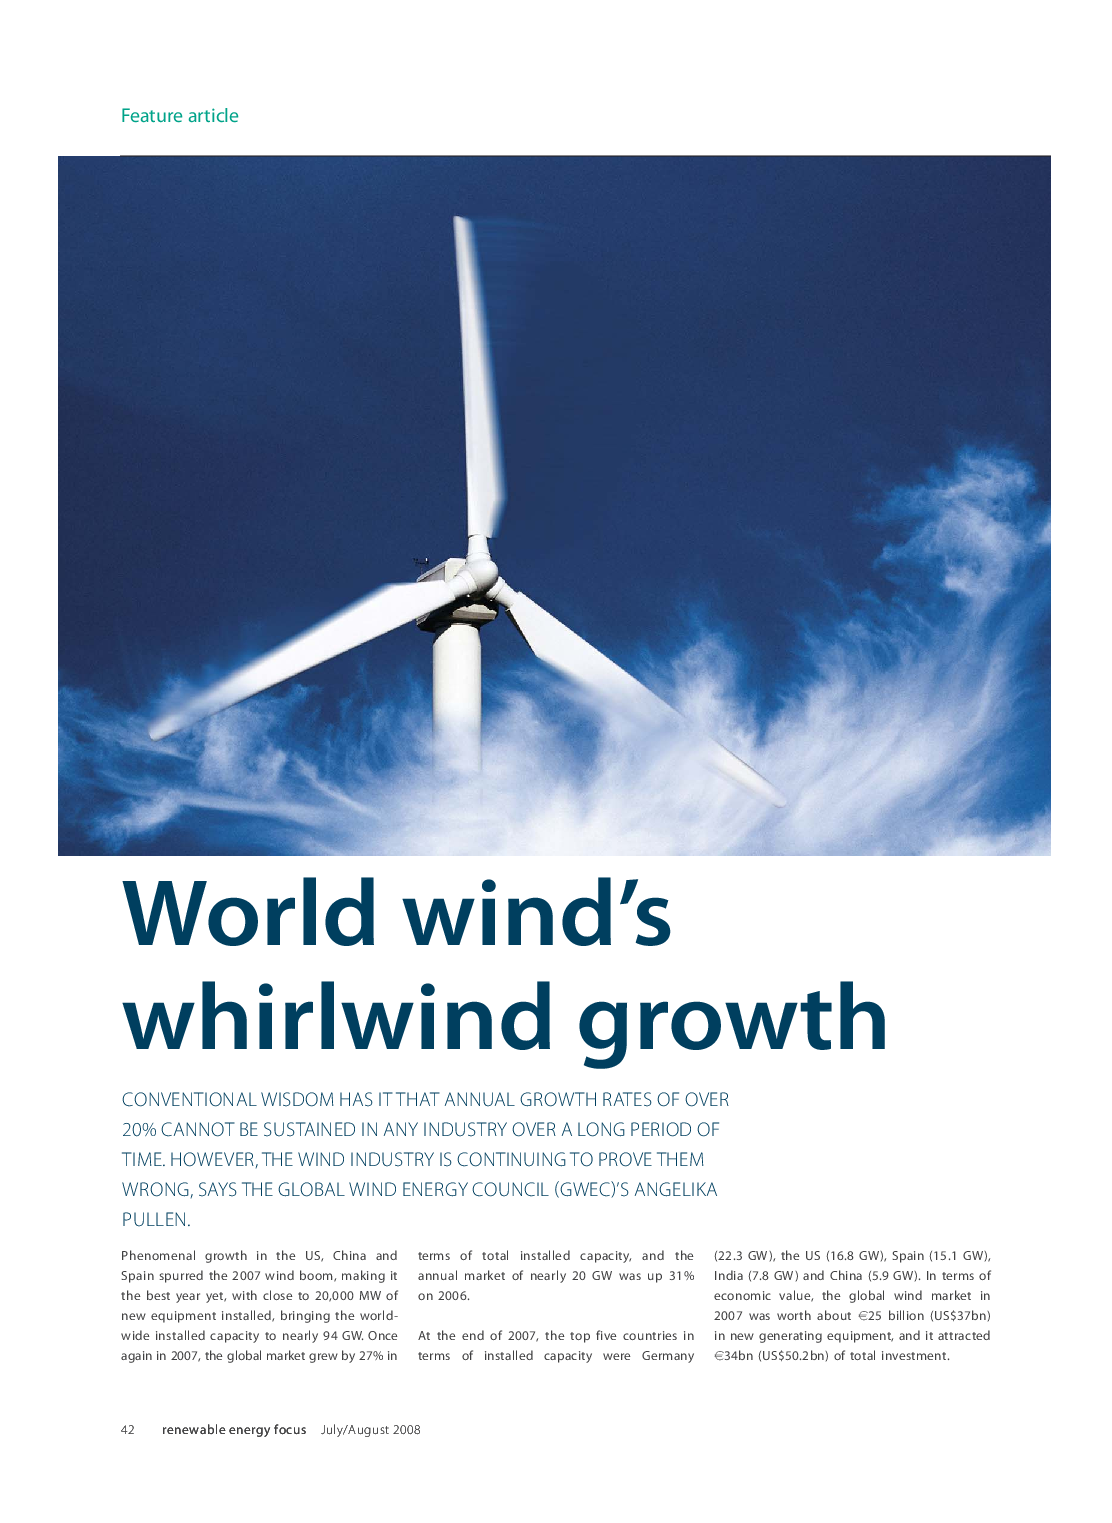 World wind's whirlwind growth